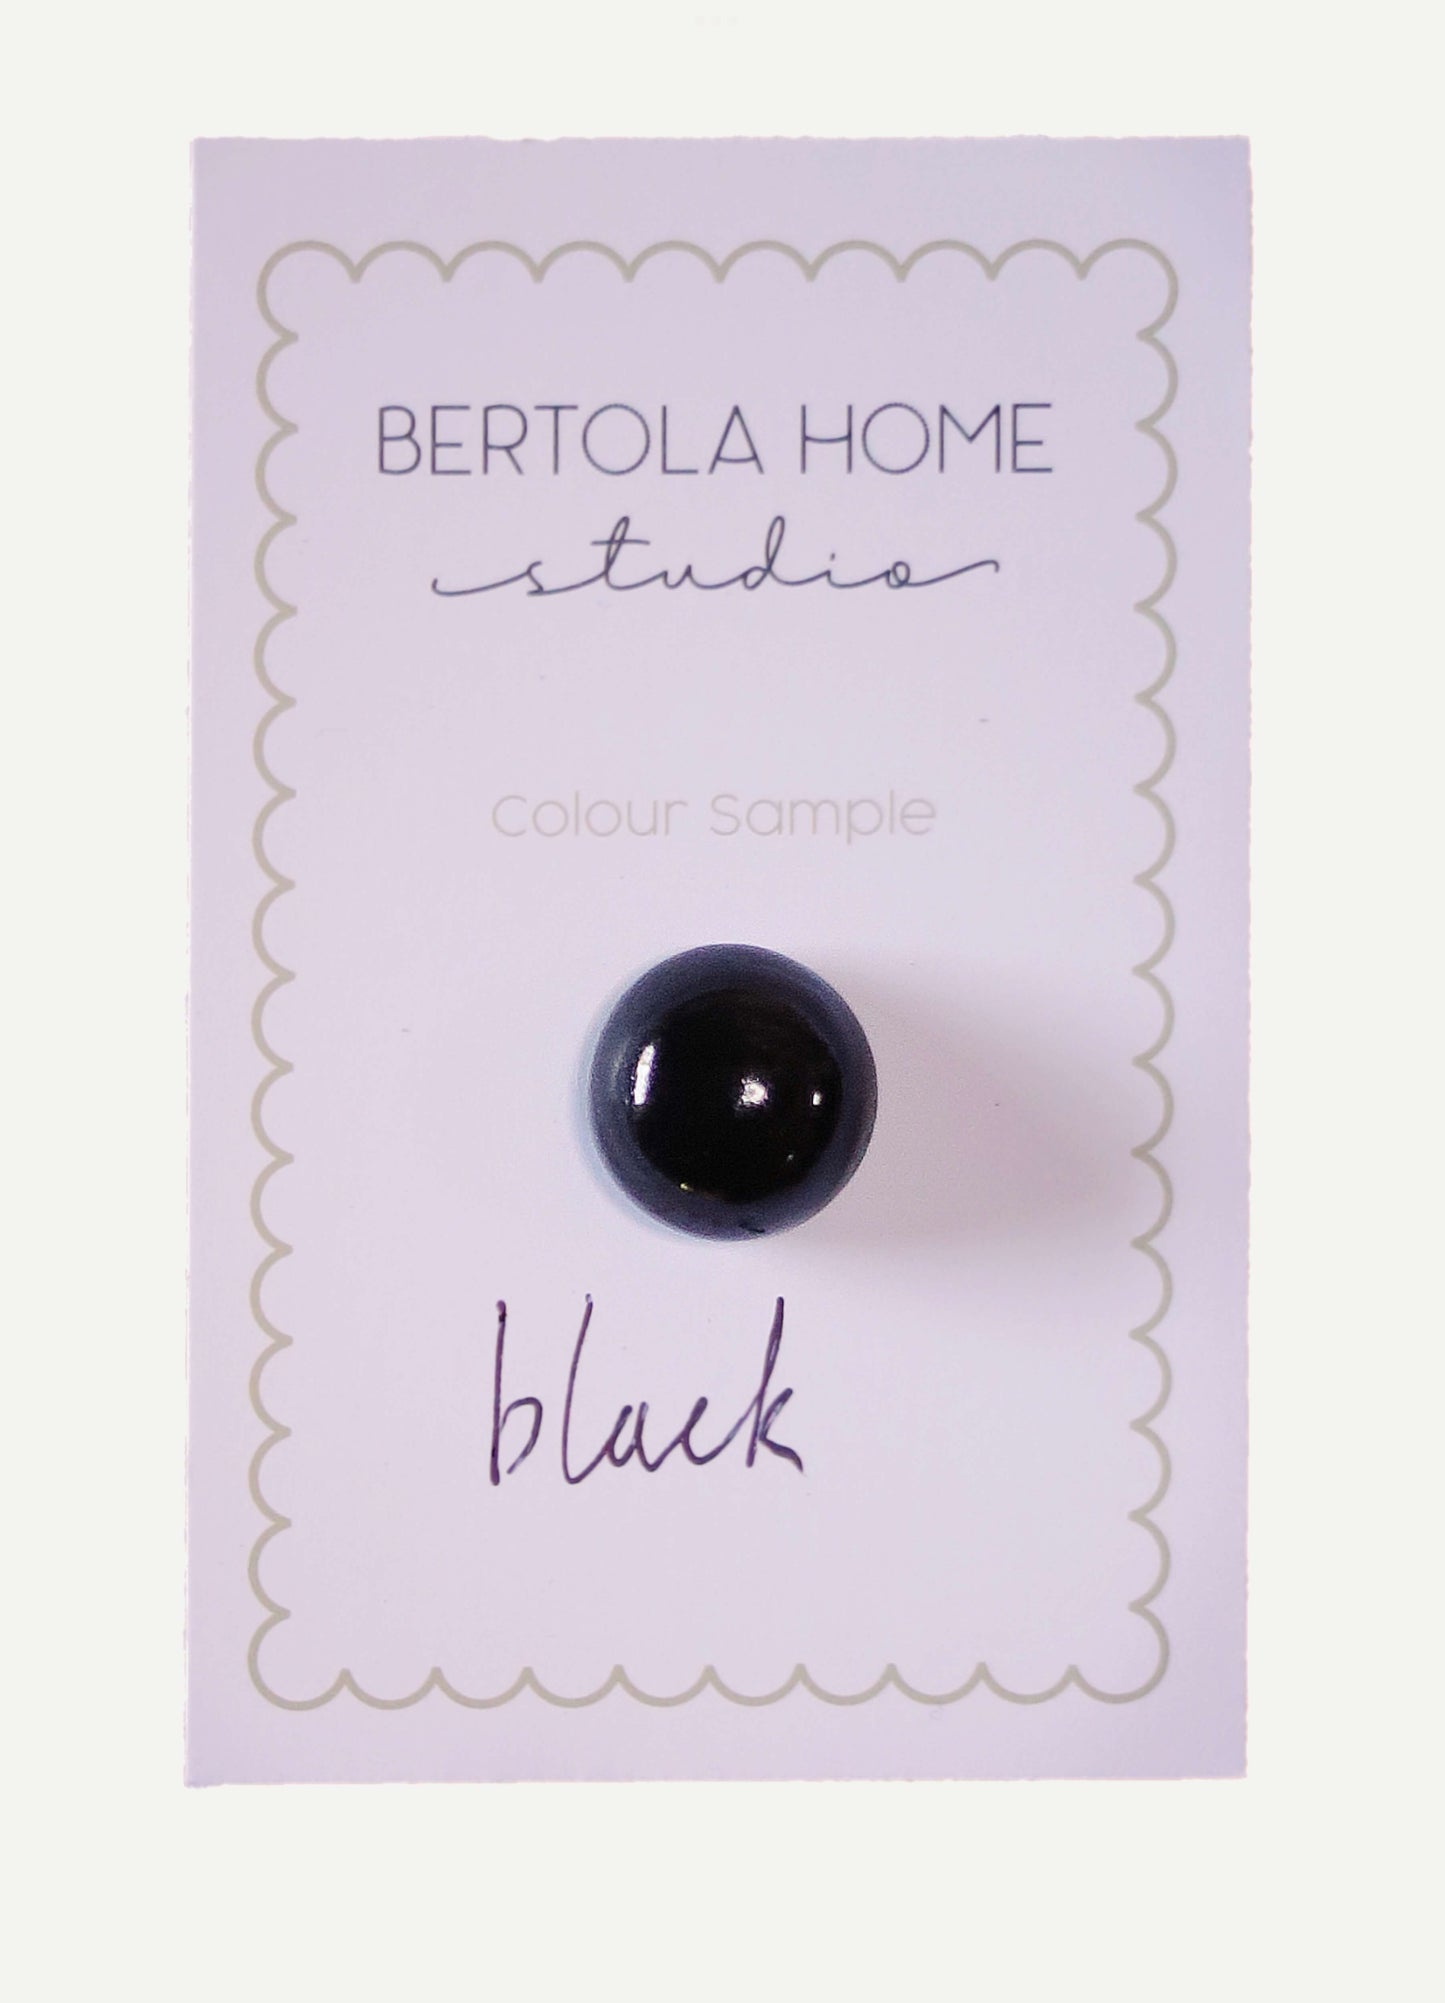 Black colour sample